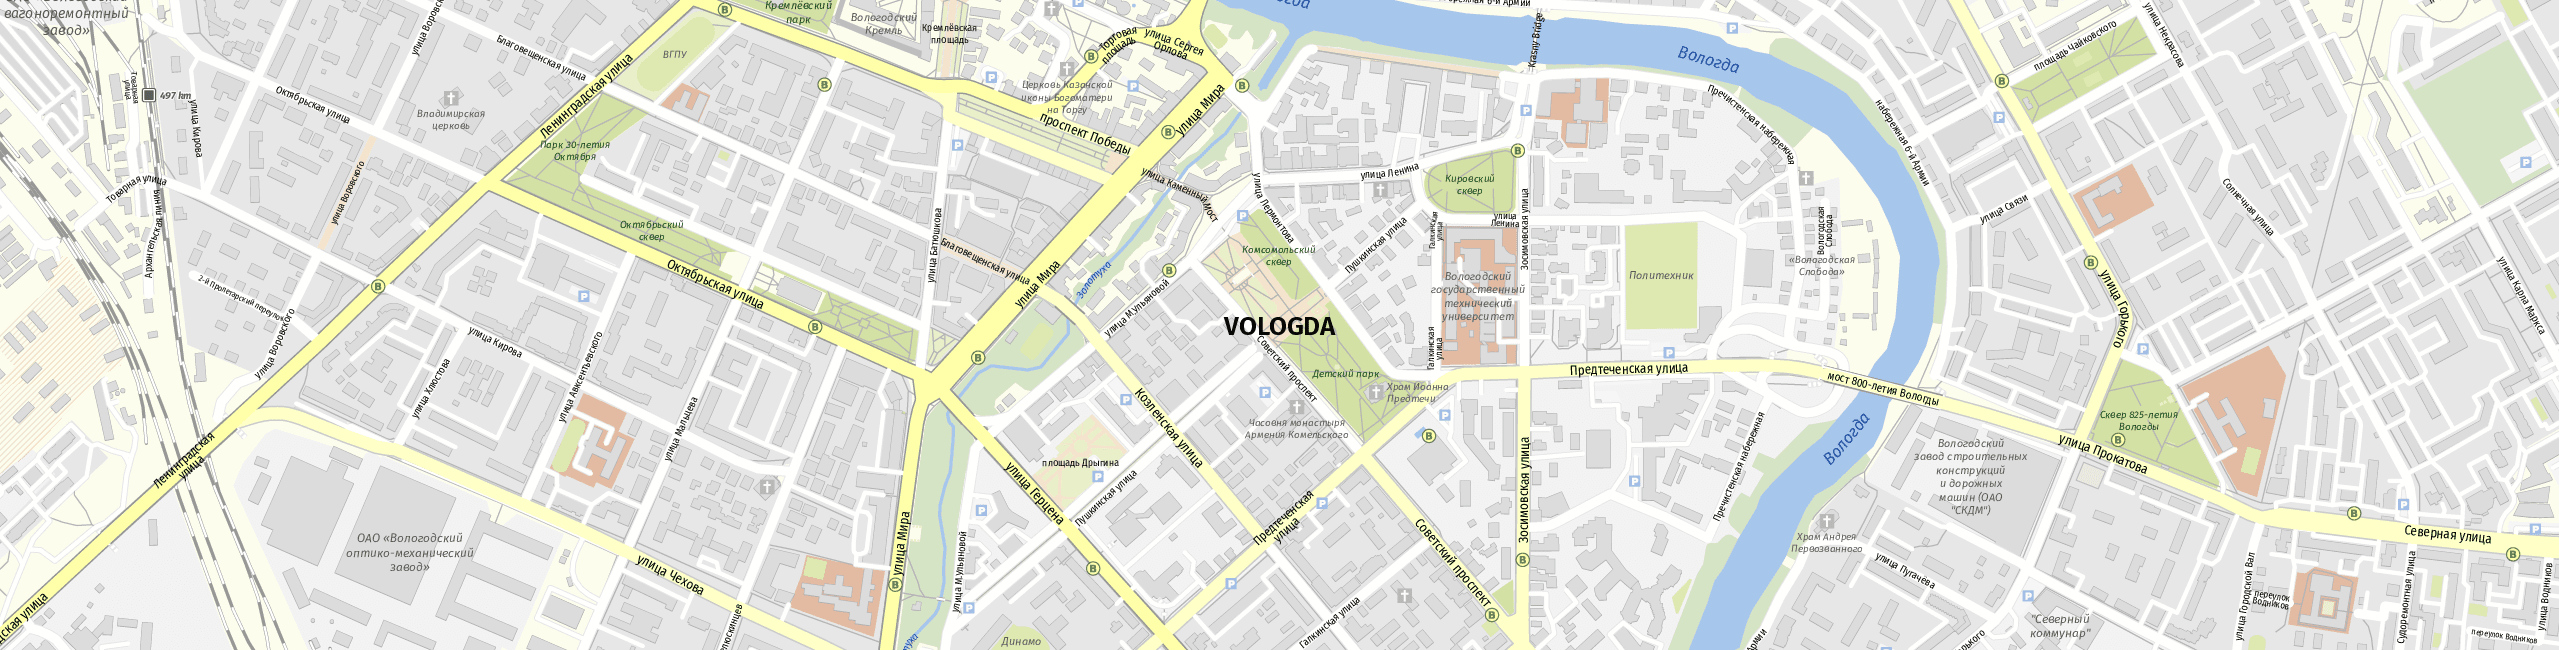 Stadtplan Wologda zum Downloaden.